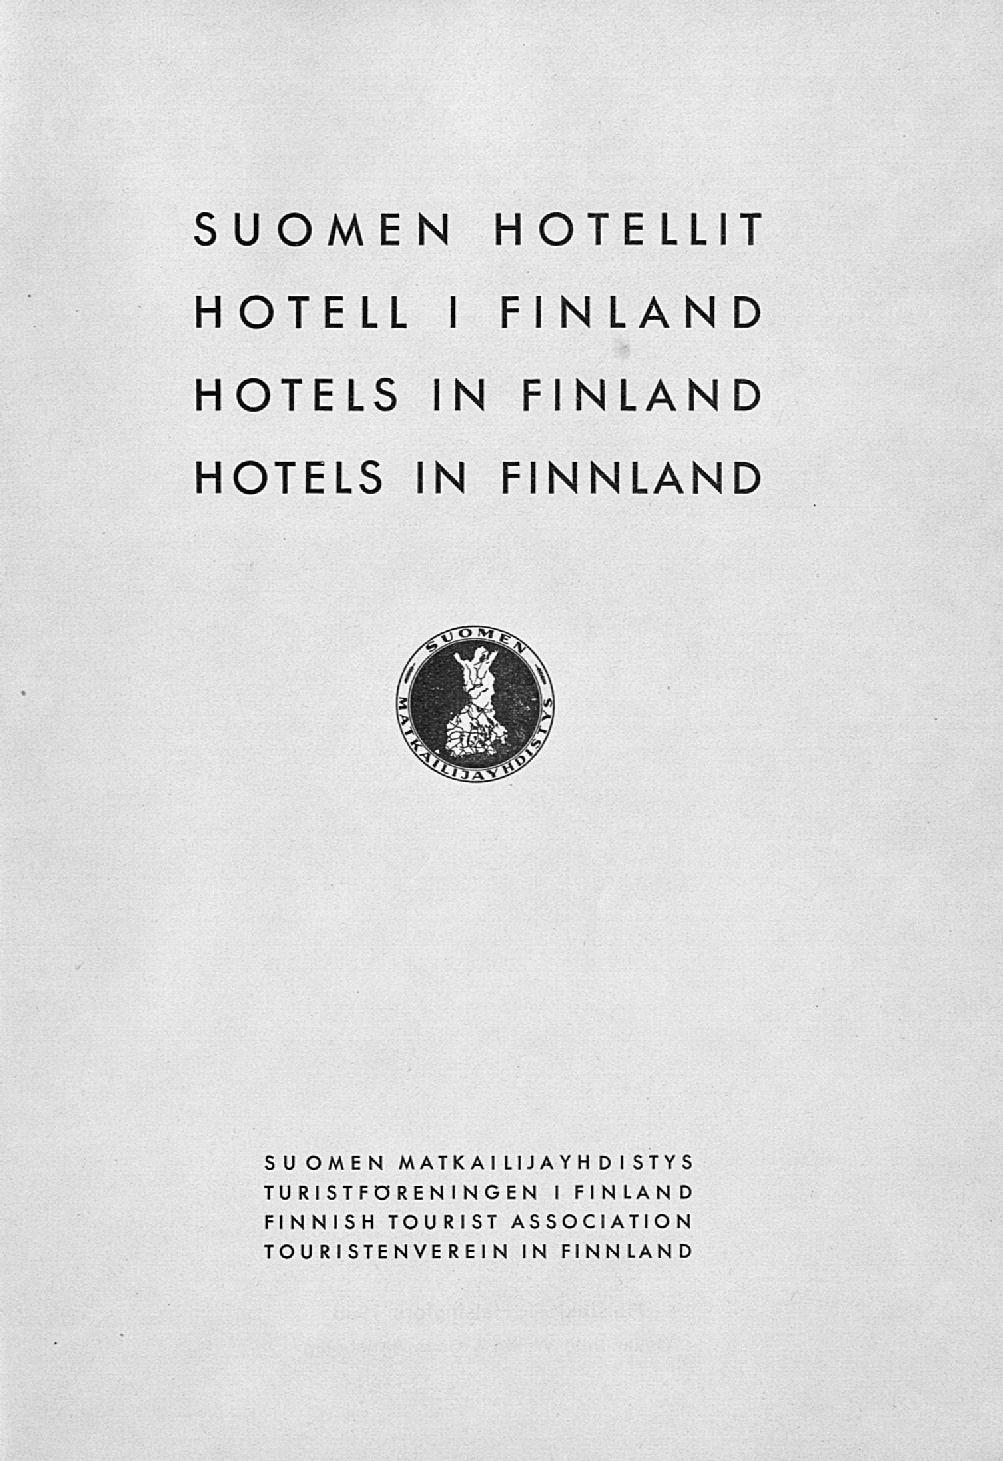 SUOMEN HOTELLIT HOTE LL I FINLAND HOTELS IN HOTELS IN FINLAND FINNLAND SUOMEN